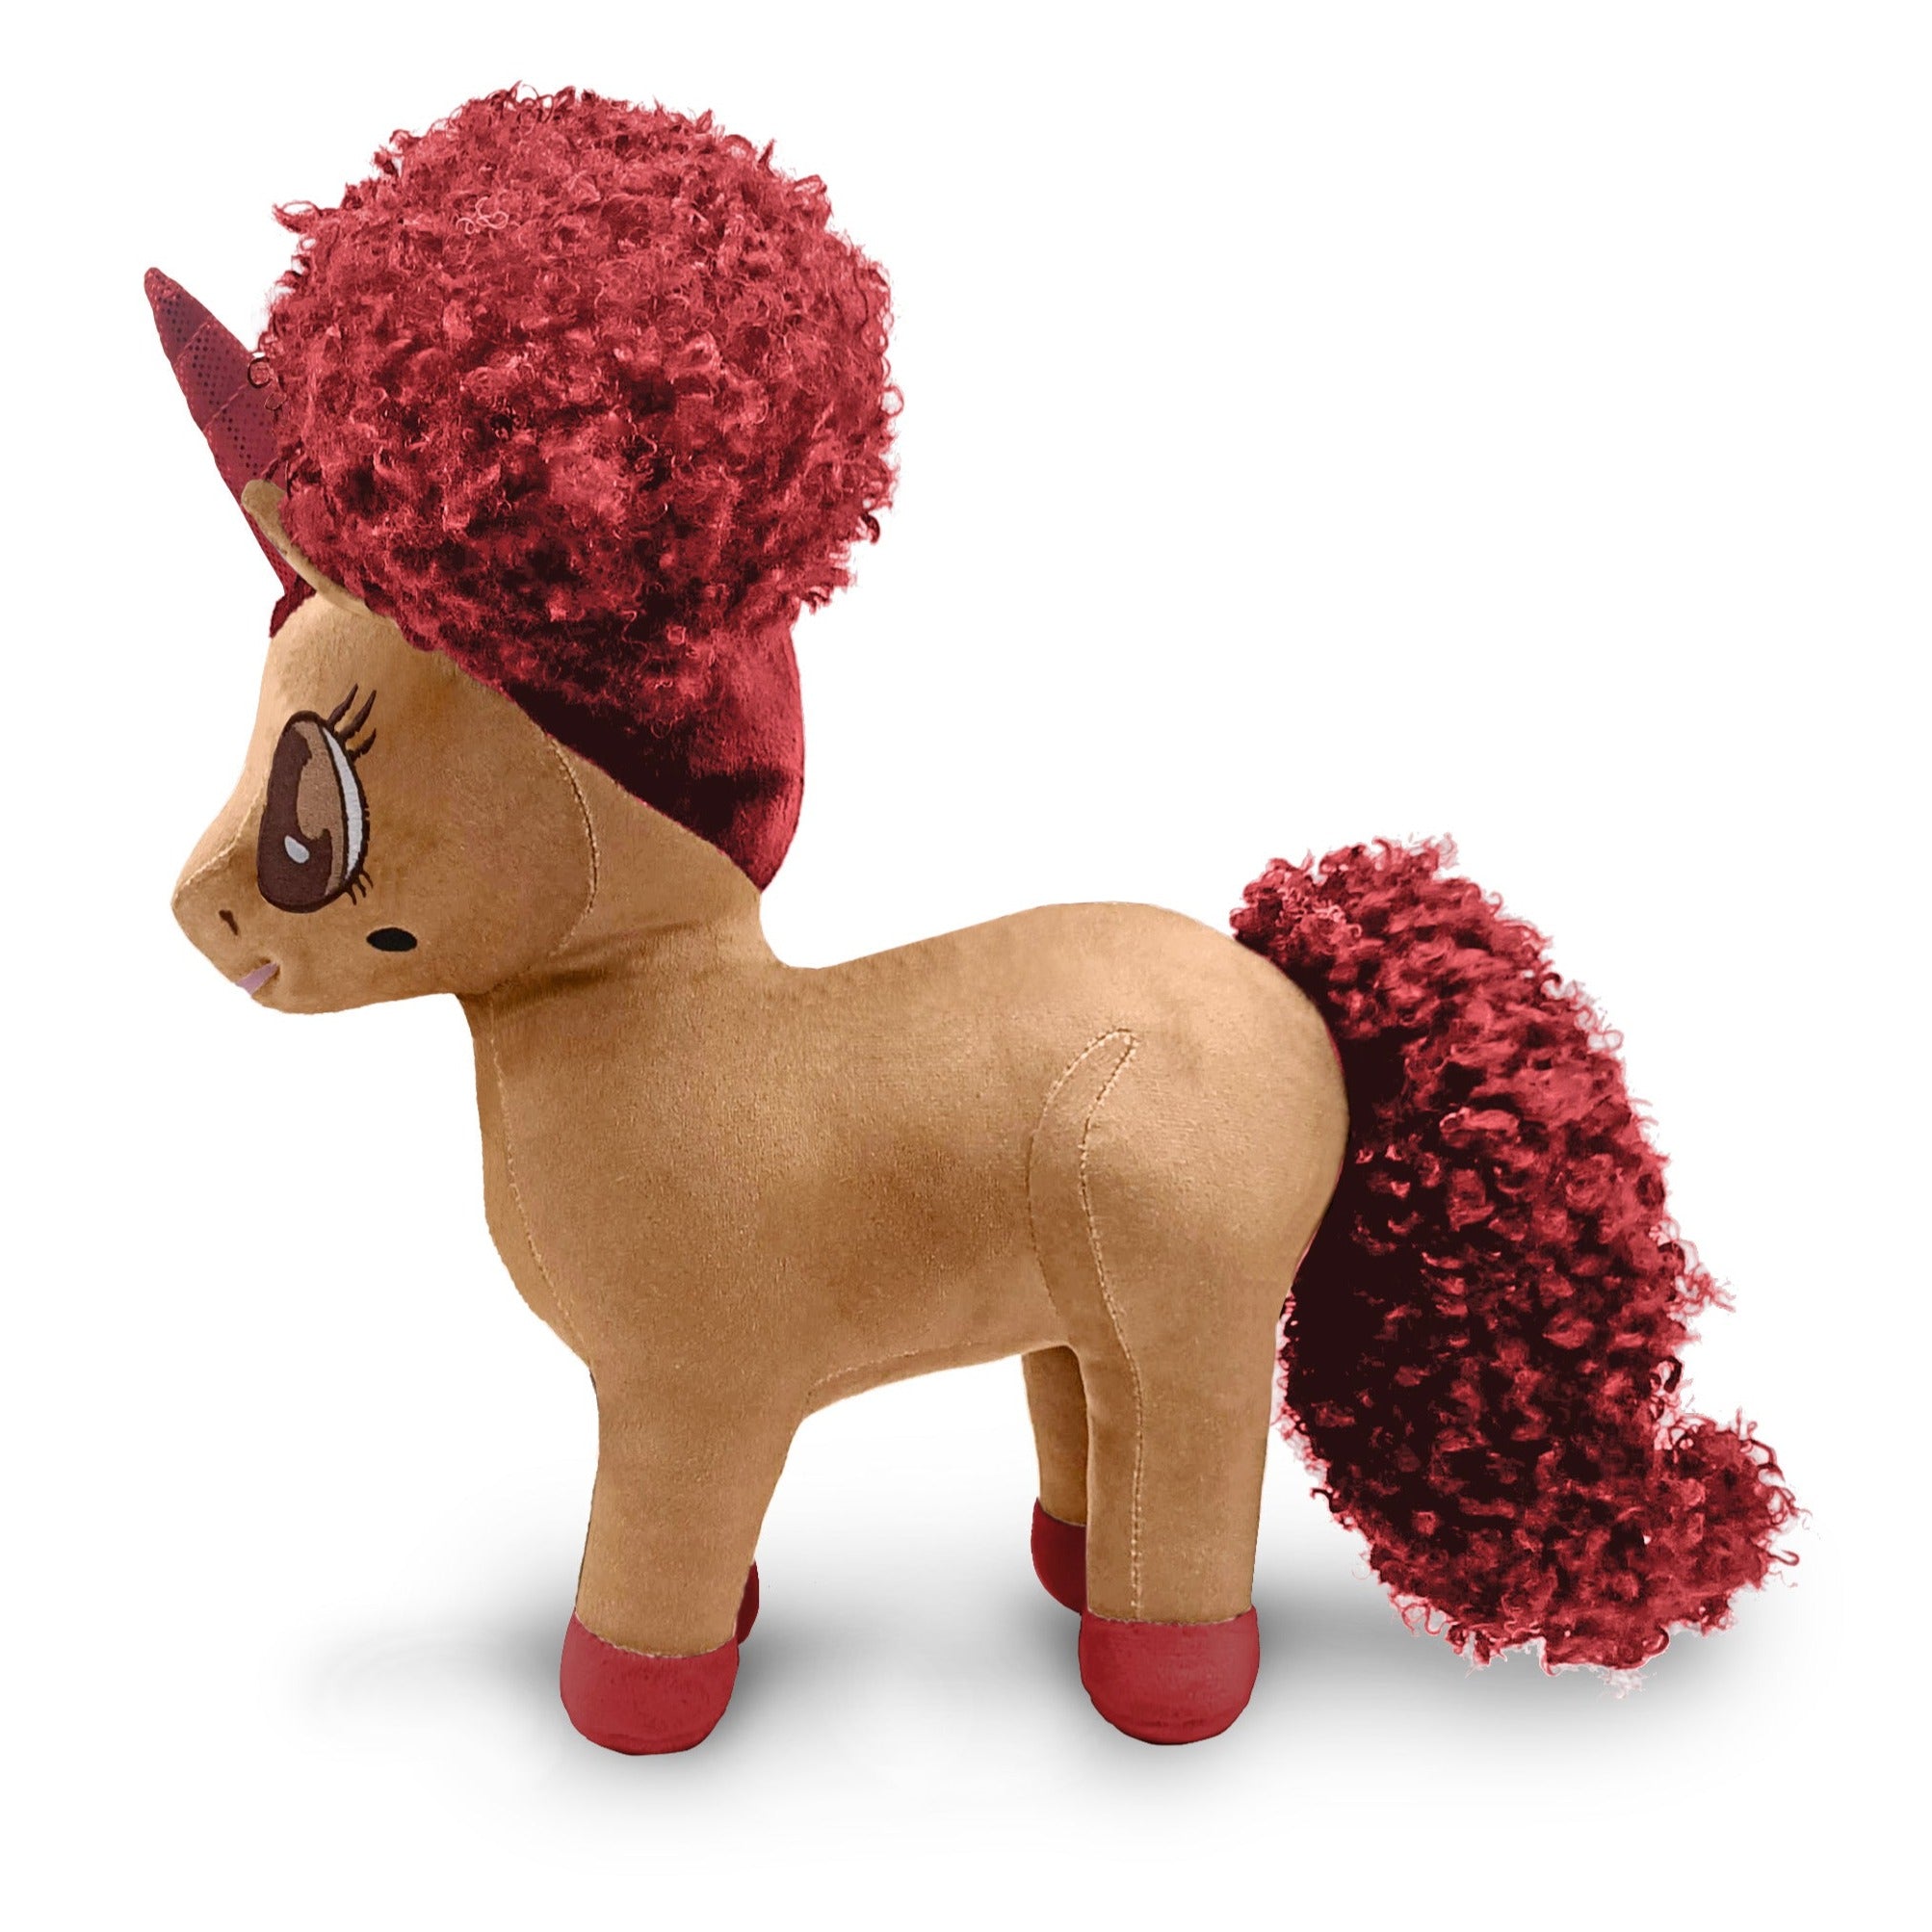 Ciara Black Unicorn Plush Toy with Red Hair - 15 inch